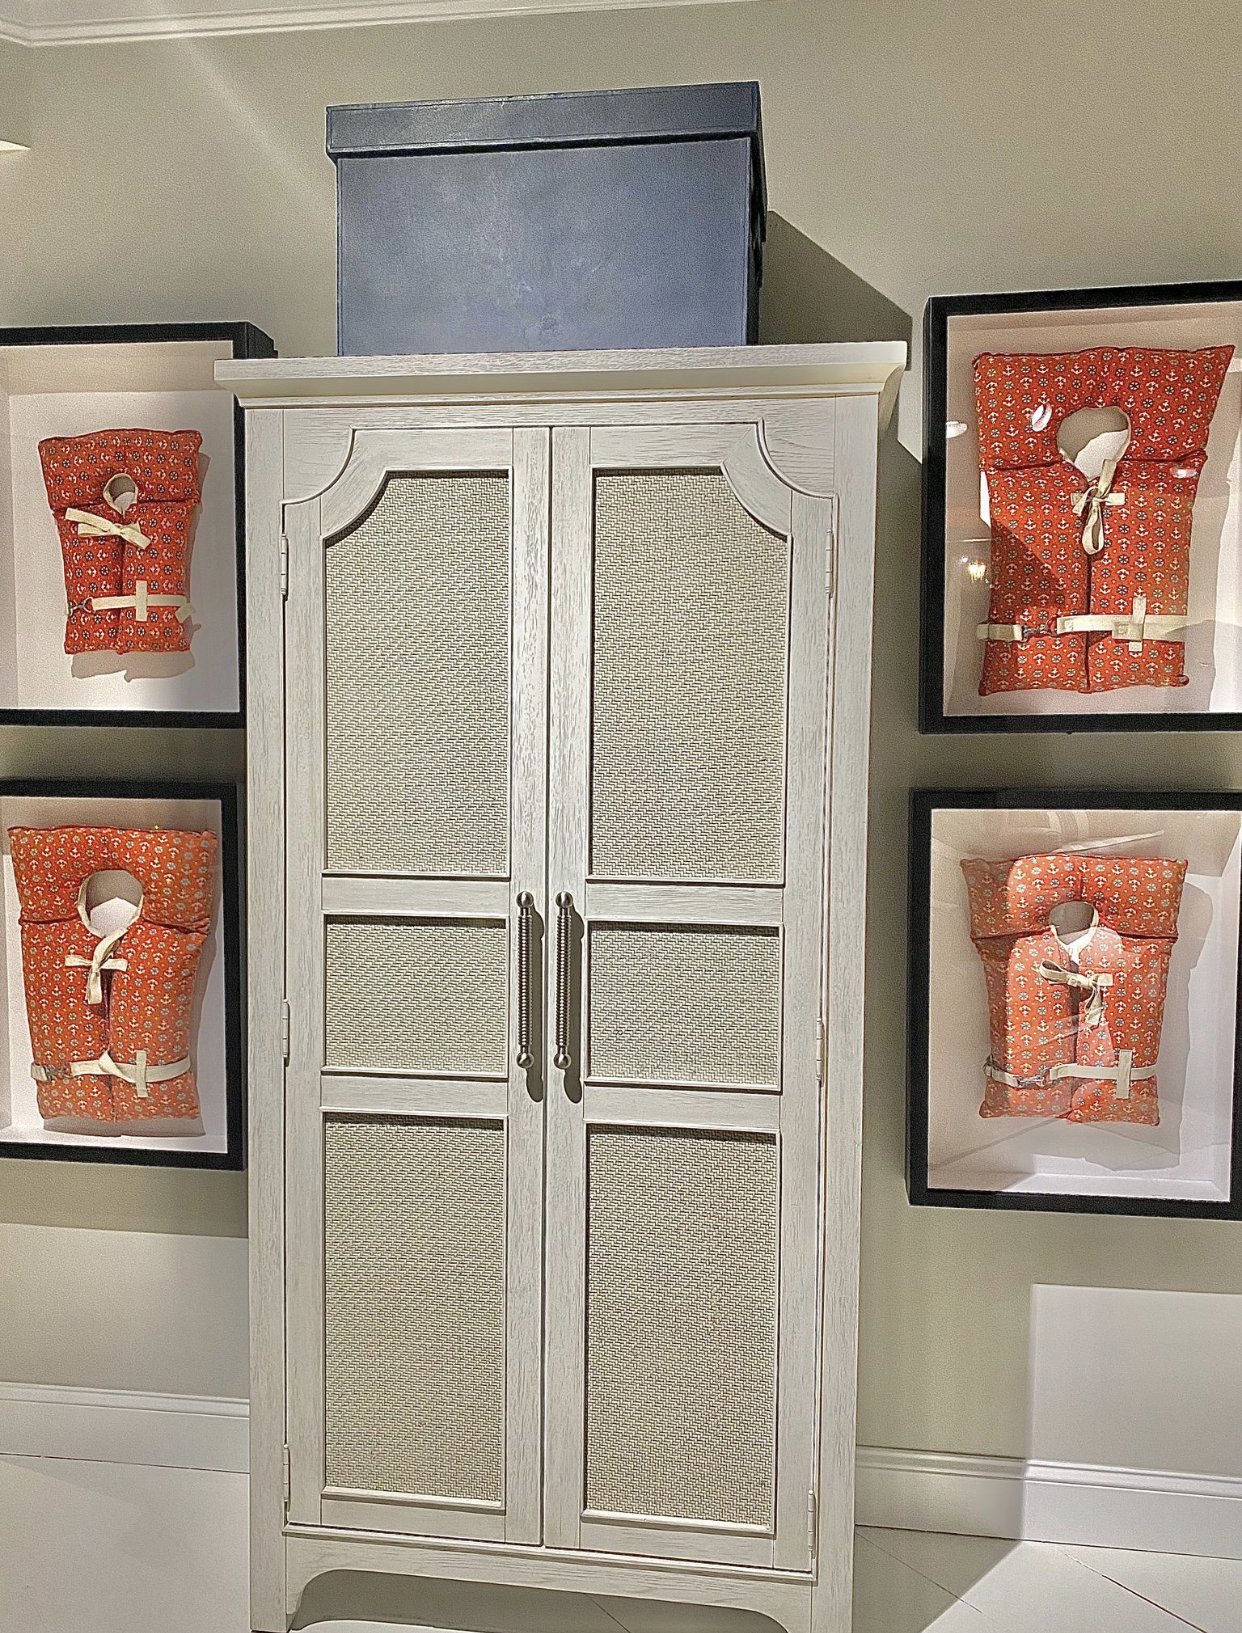 Wicker insert armoire with orange accessories .jpg